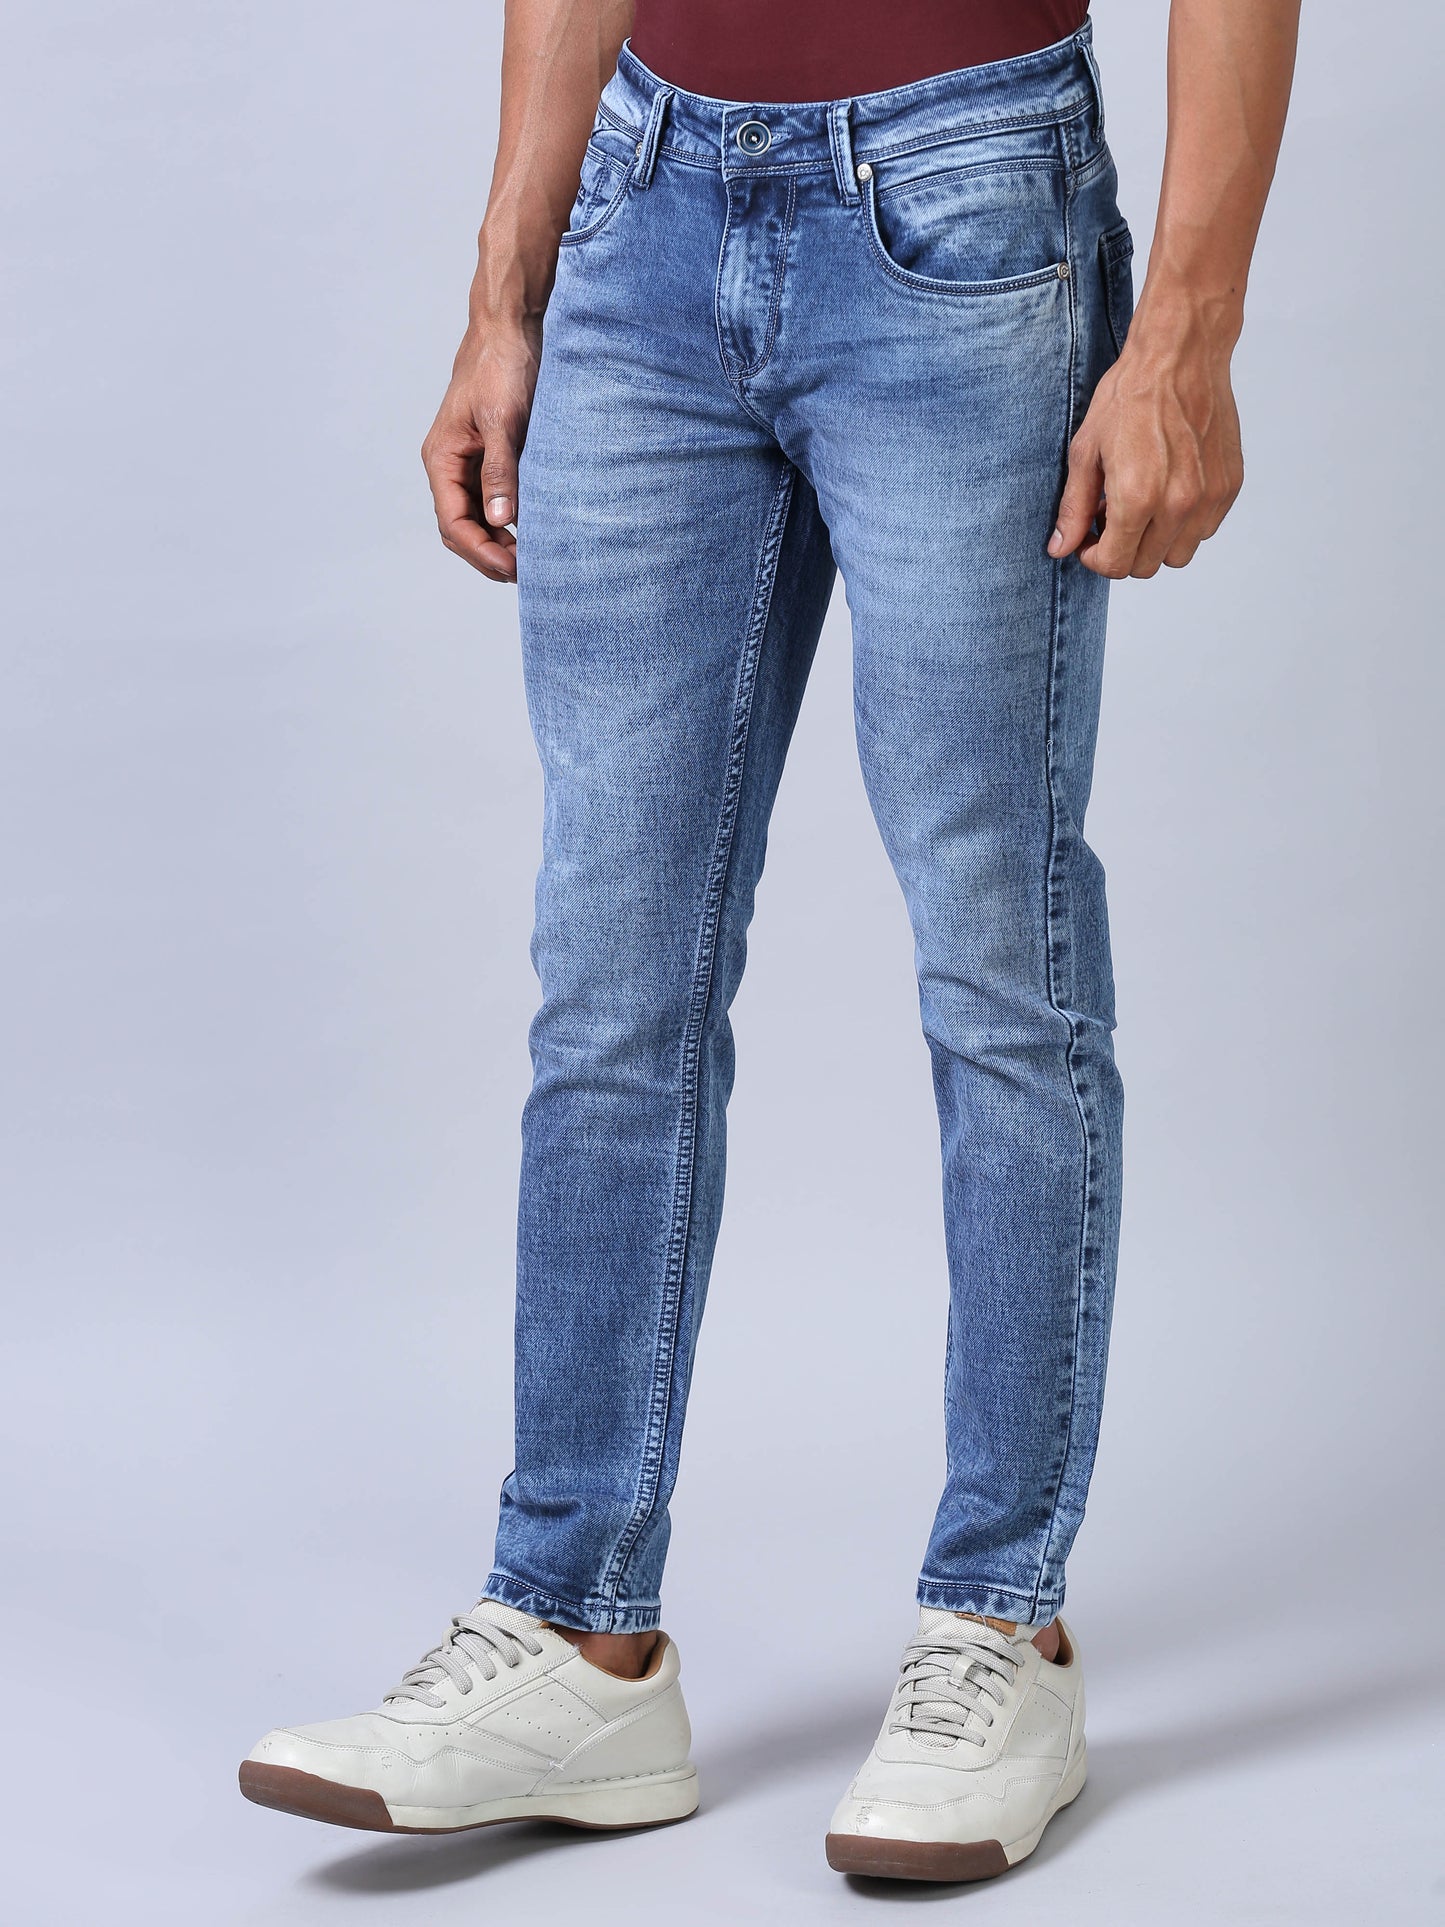 Ankel Fit Jeans - Light Indigo